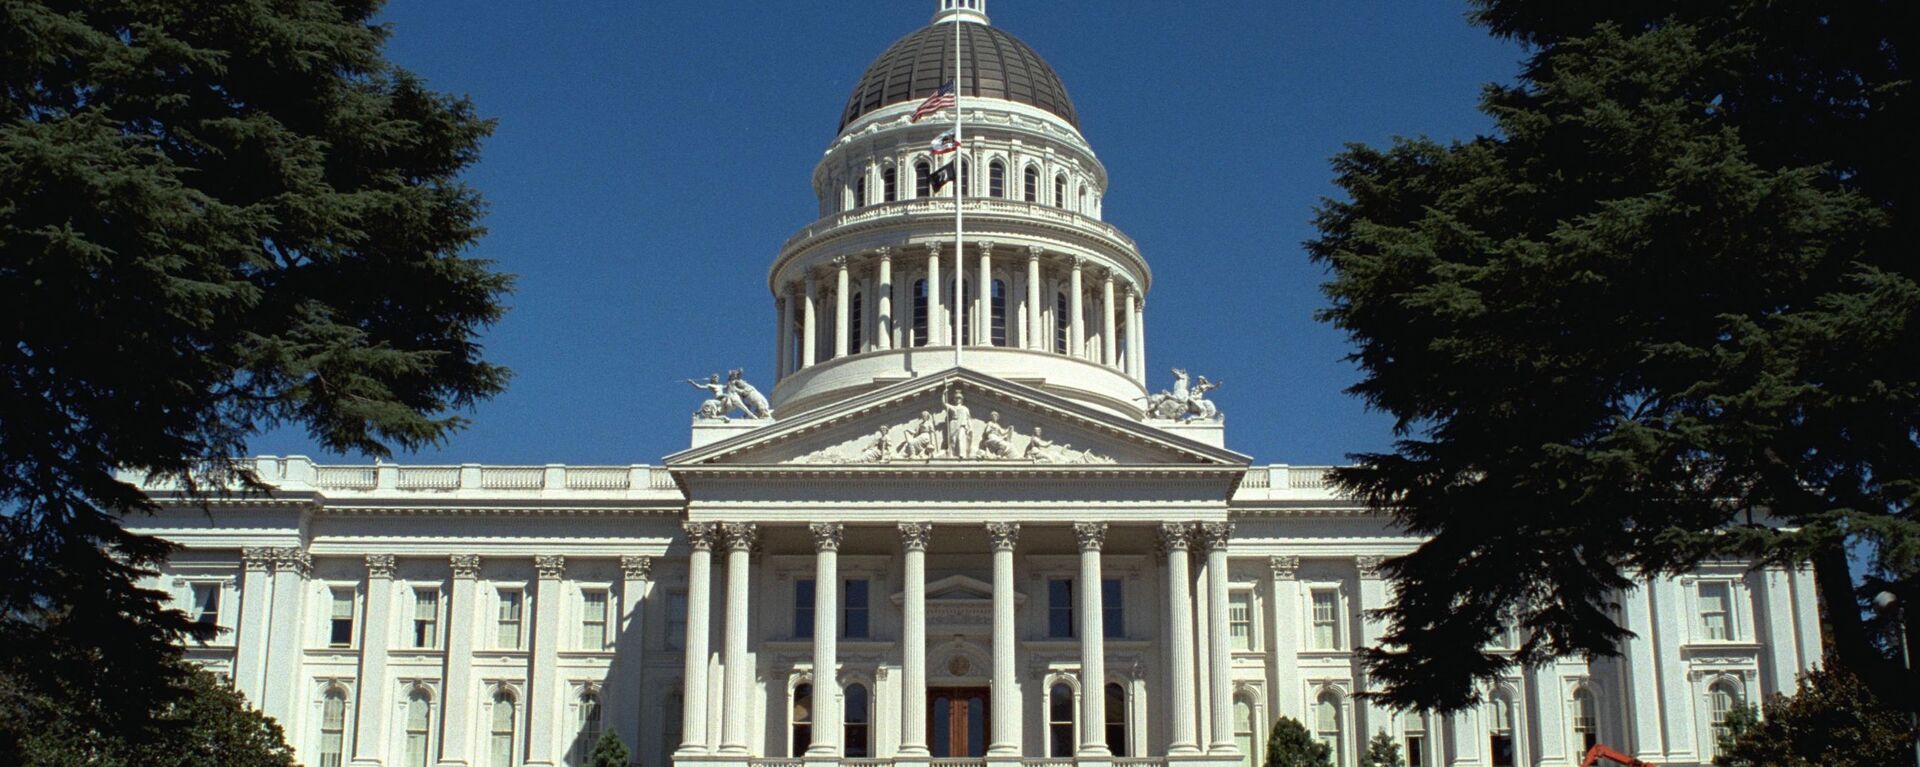 California State Capitol building. - Sputnik International, 1920, 12.12.2021